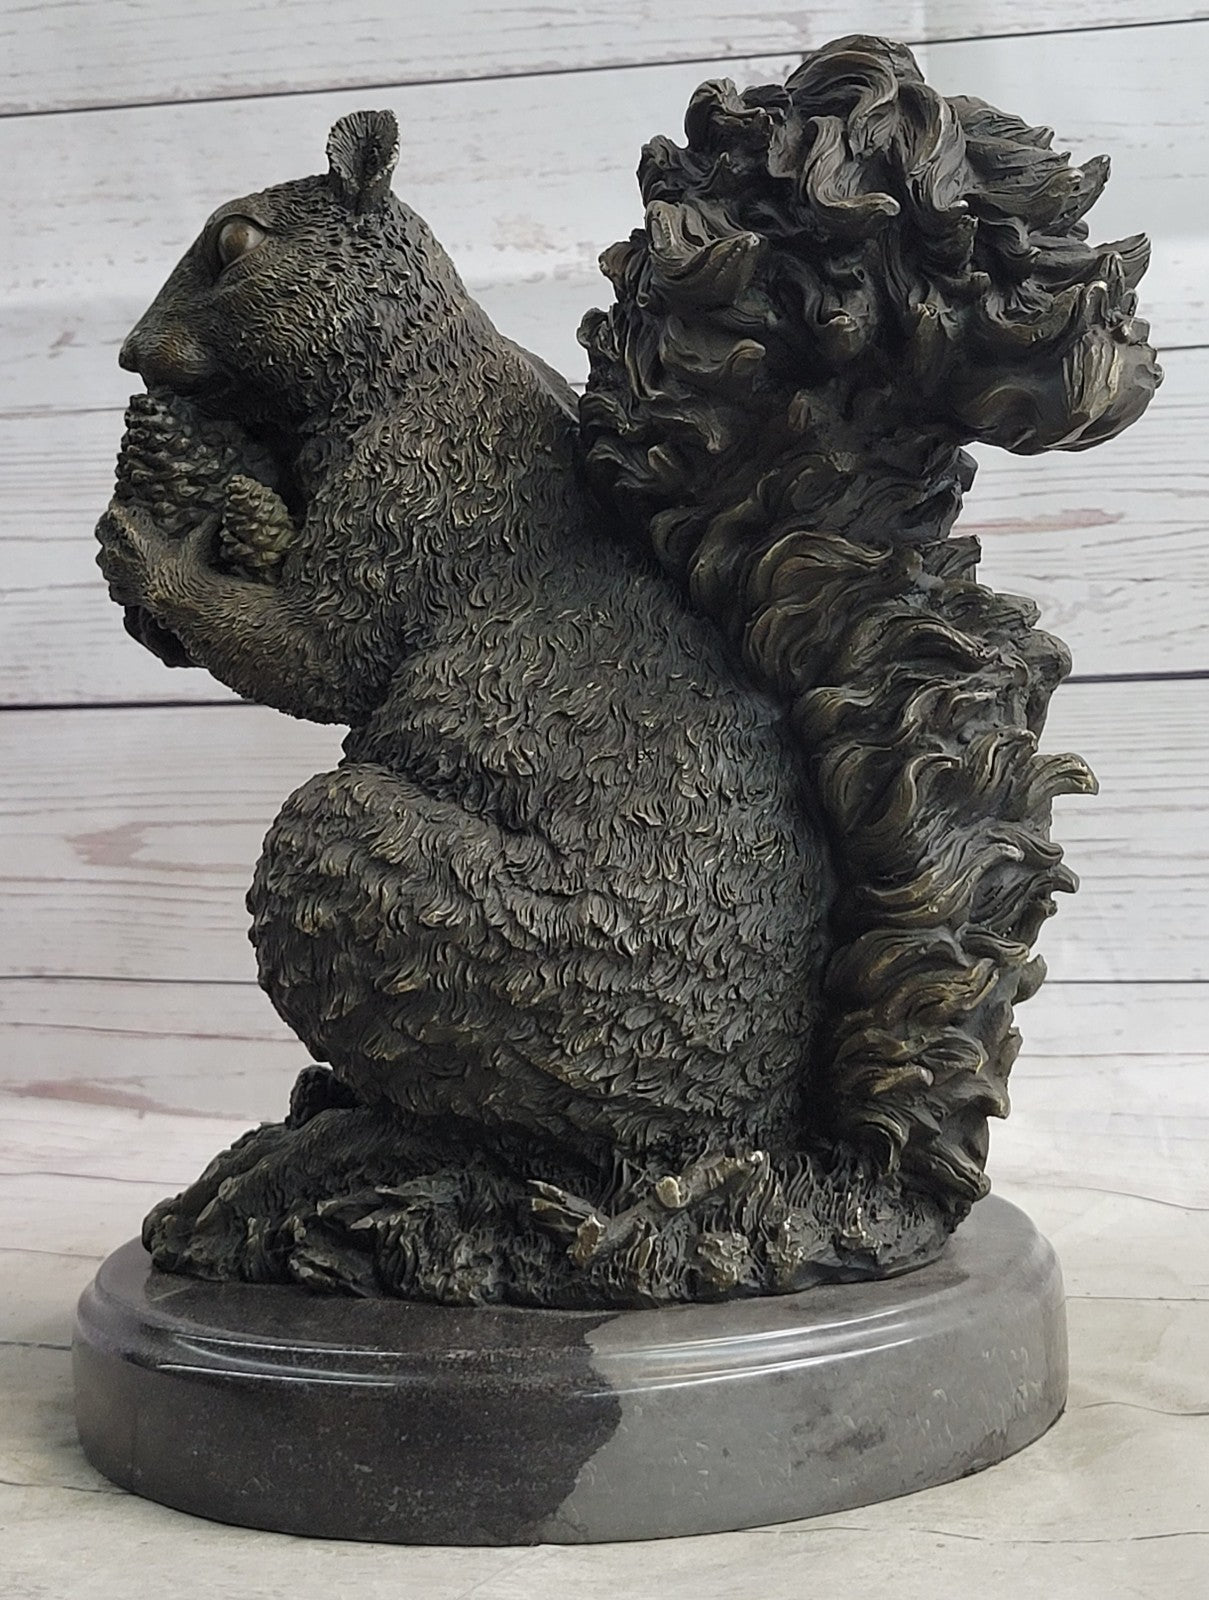 Handmade Bronze Squirrel Figurine | Sculpture Statue with Exquisite Detailing